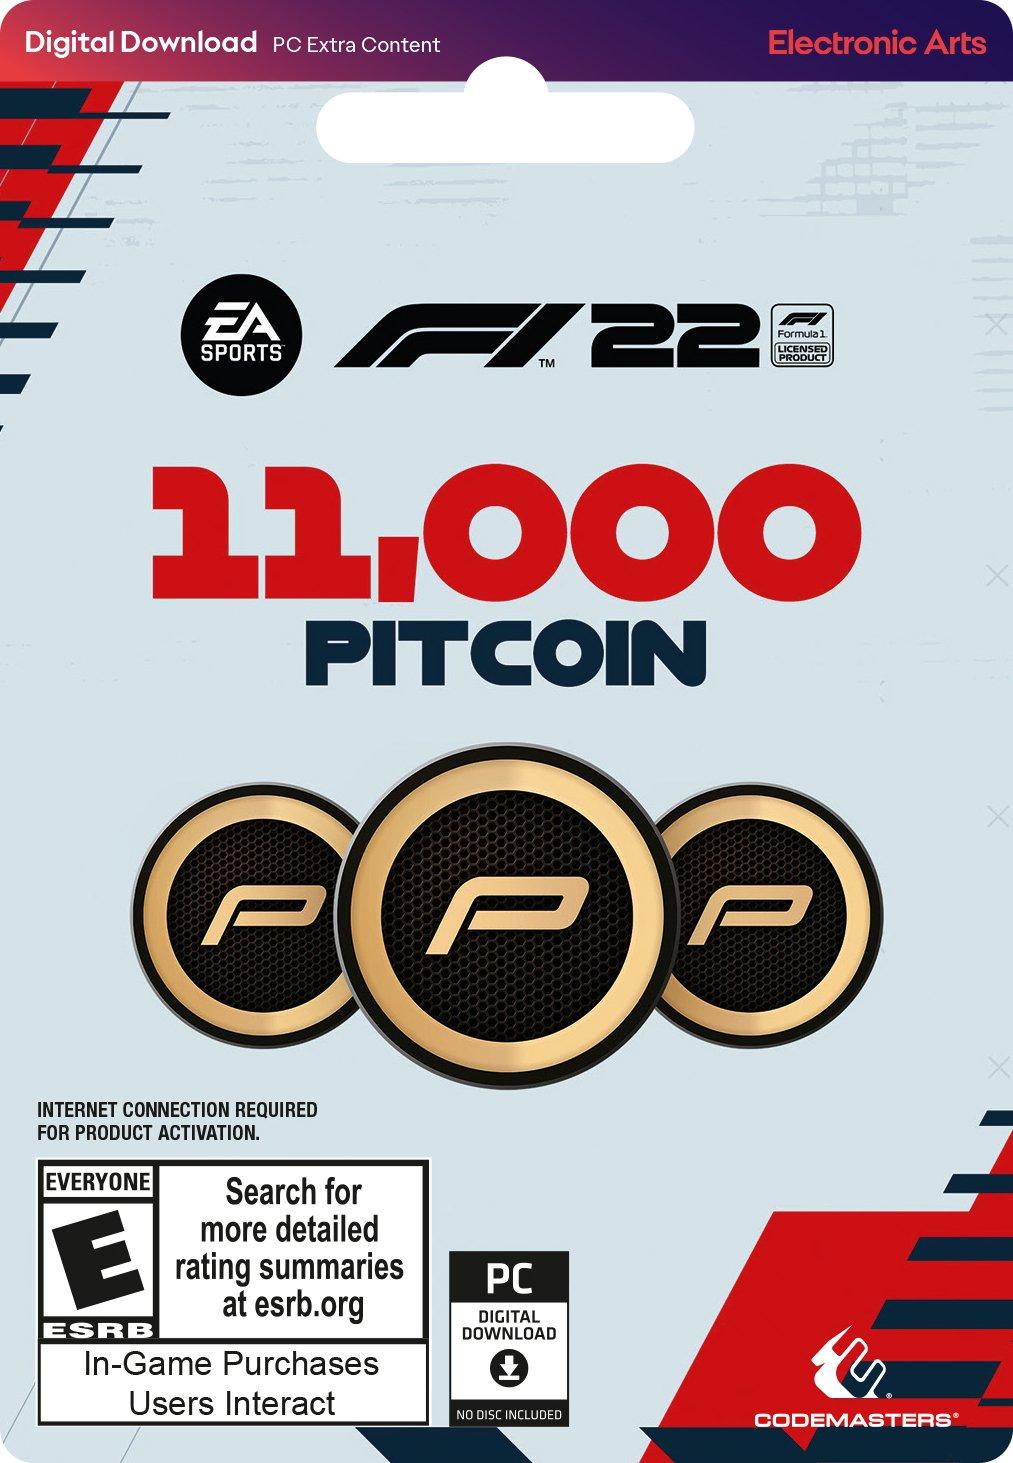 F1 2022 Pitcoin - PC